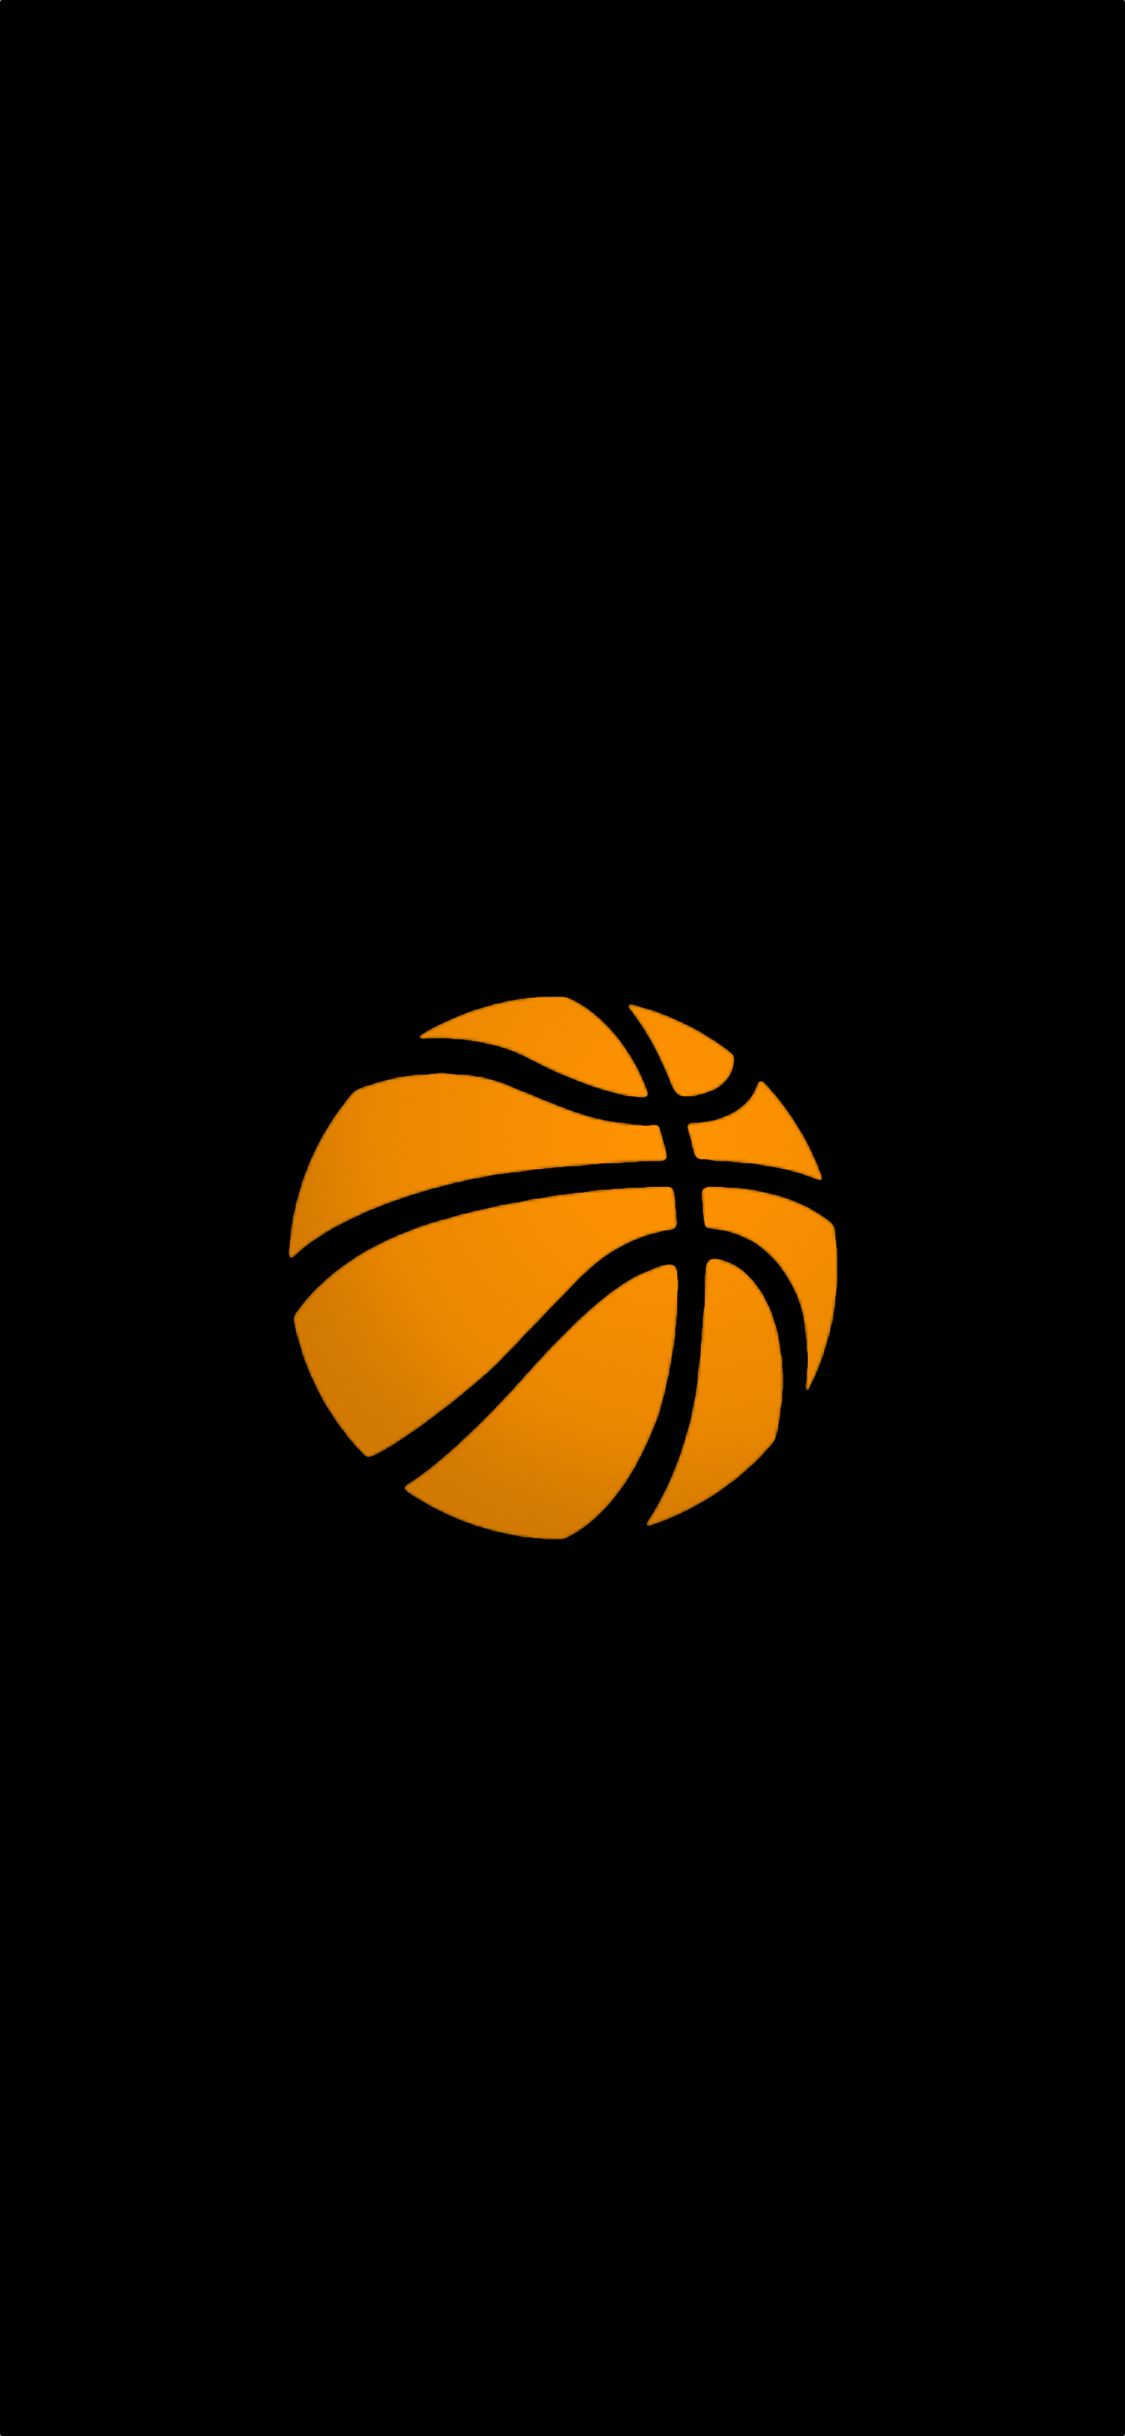 Basketball. iPhone X Wallpaper. Basketball wallpaper, Basketball iphone wallpaper, Nba wallpaper